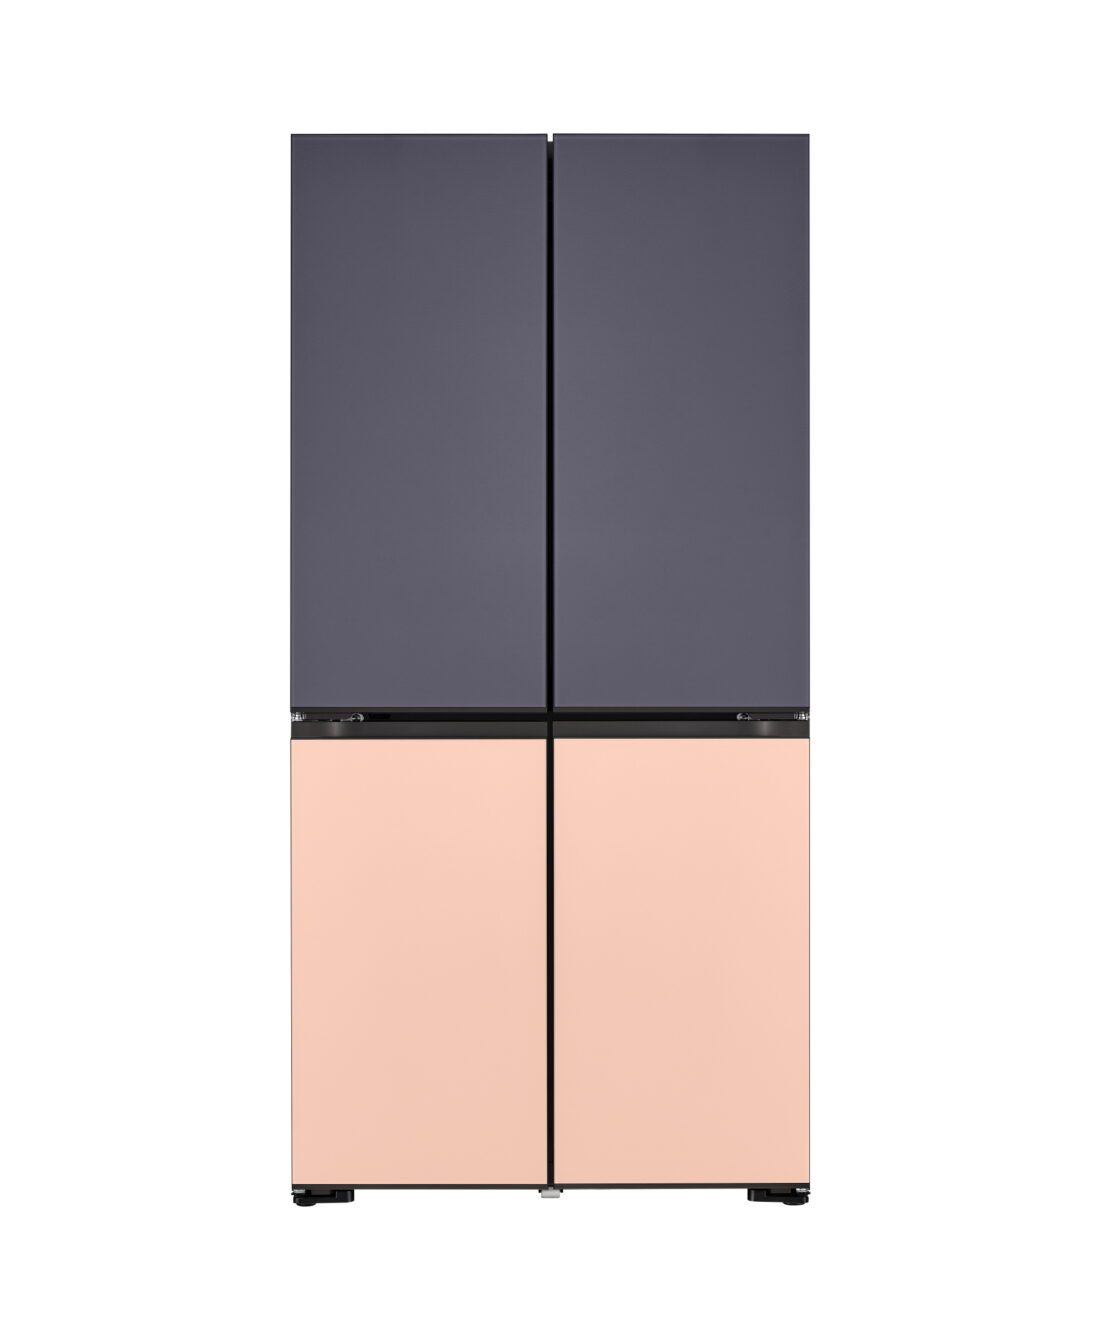 MoodUP™ refrigerator_Product_Paris_01 – LG NEWSROOM